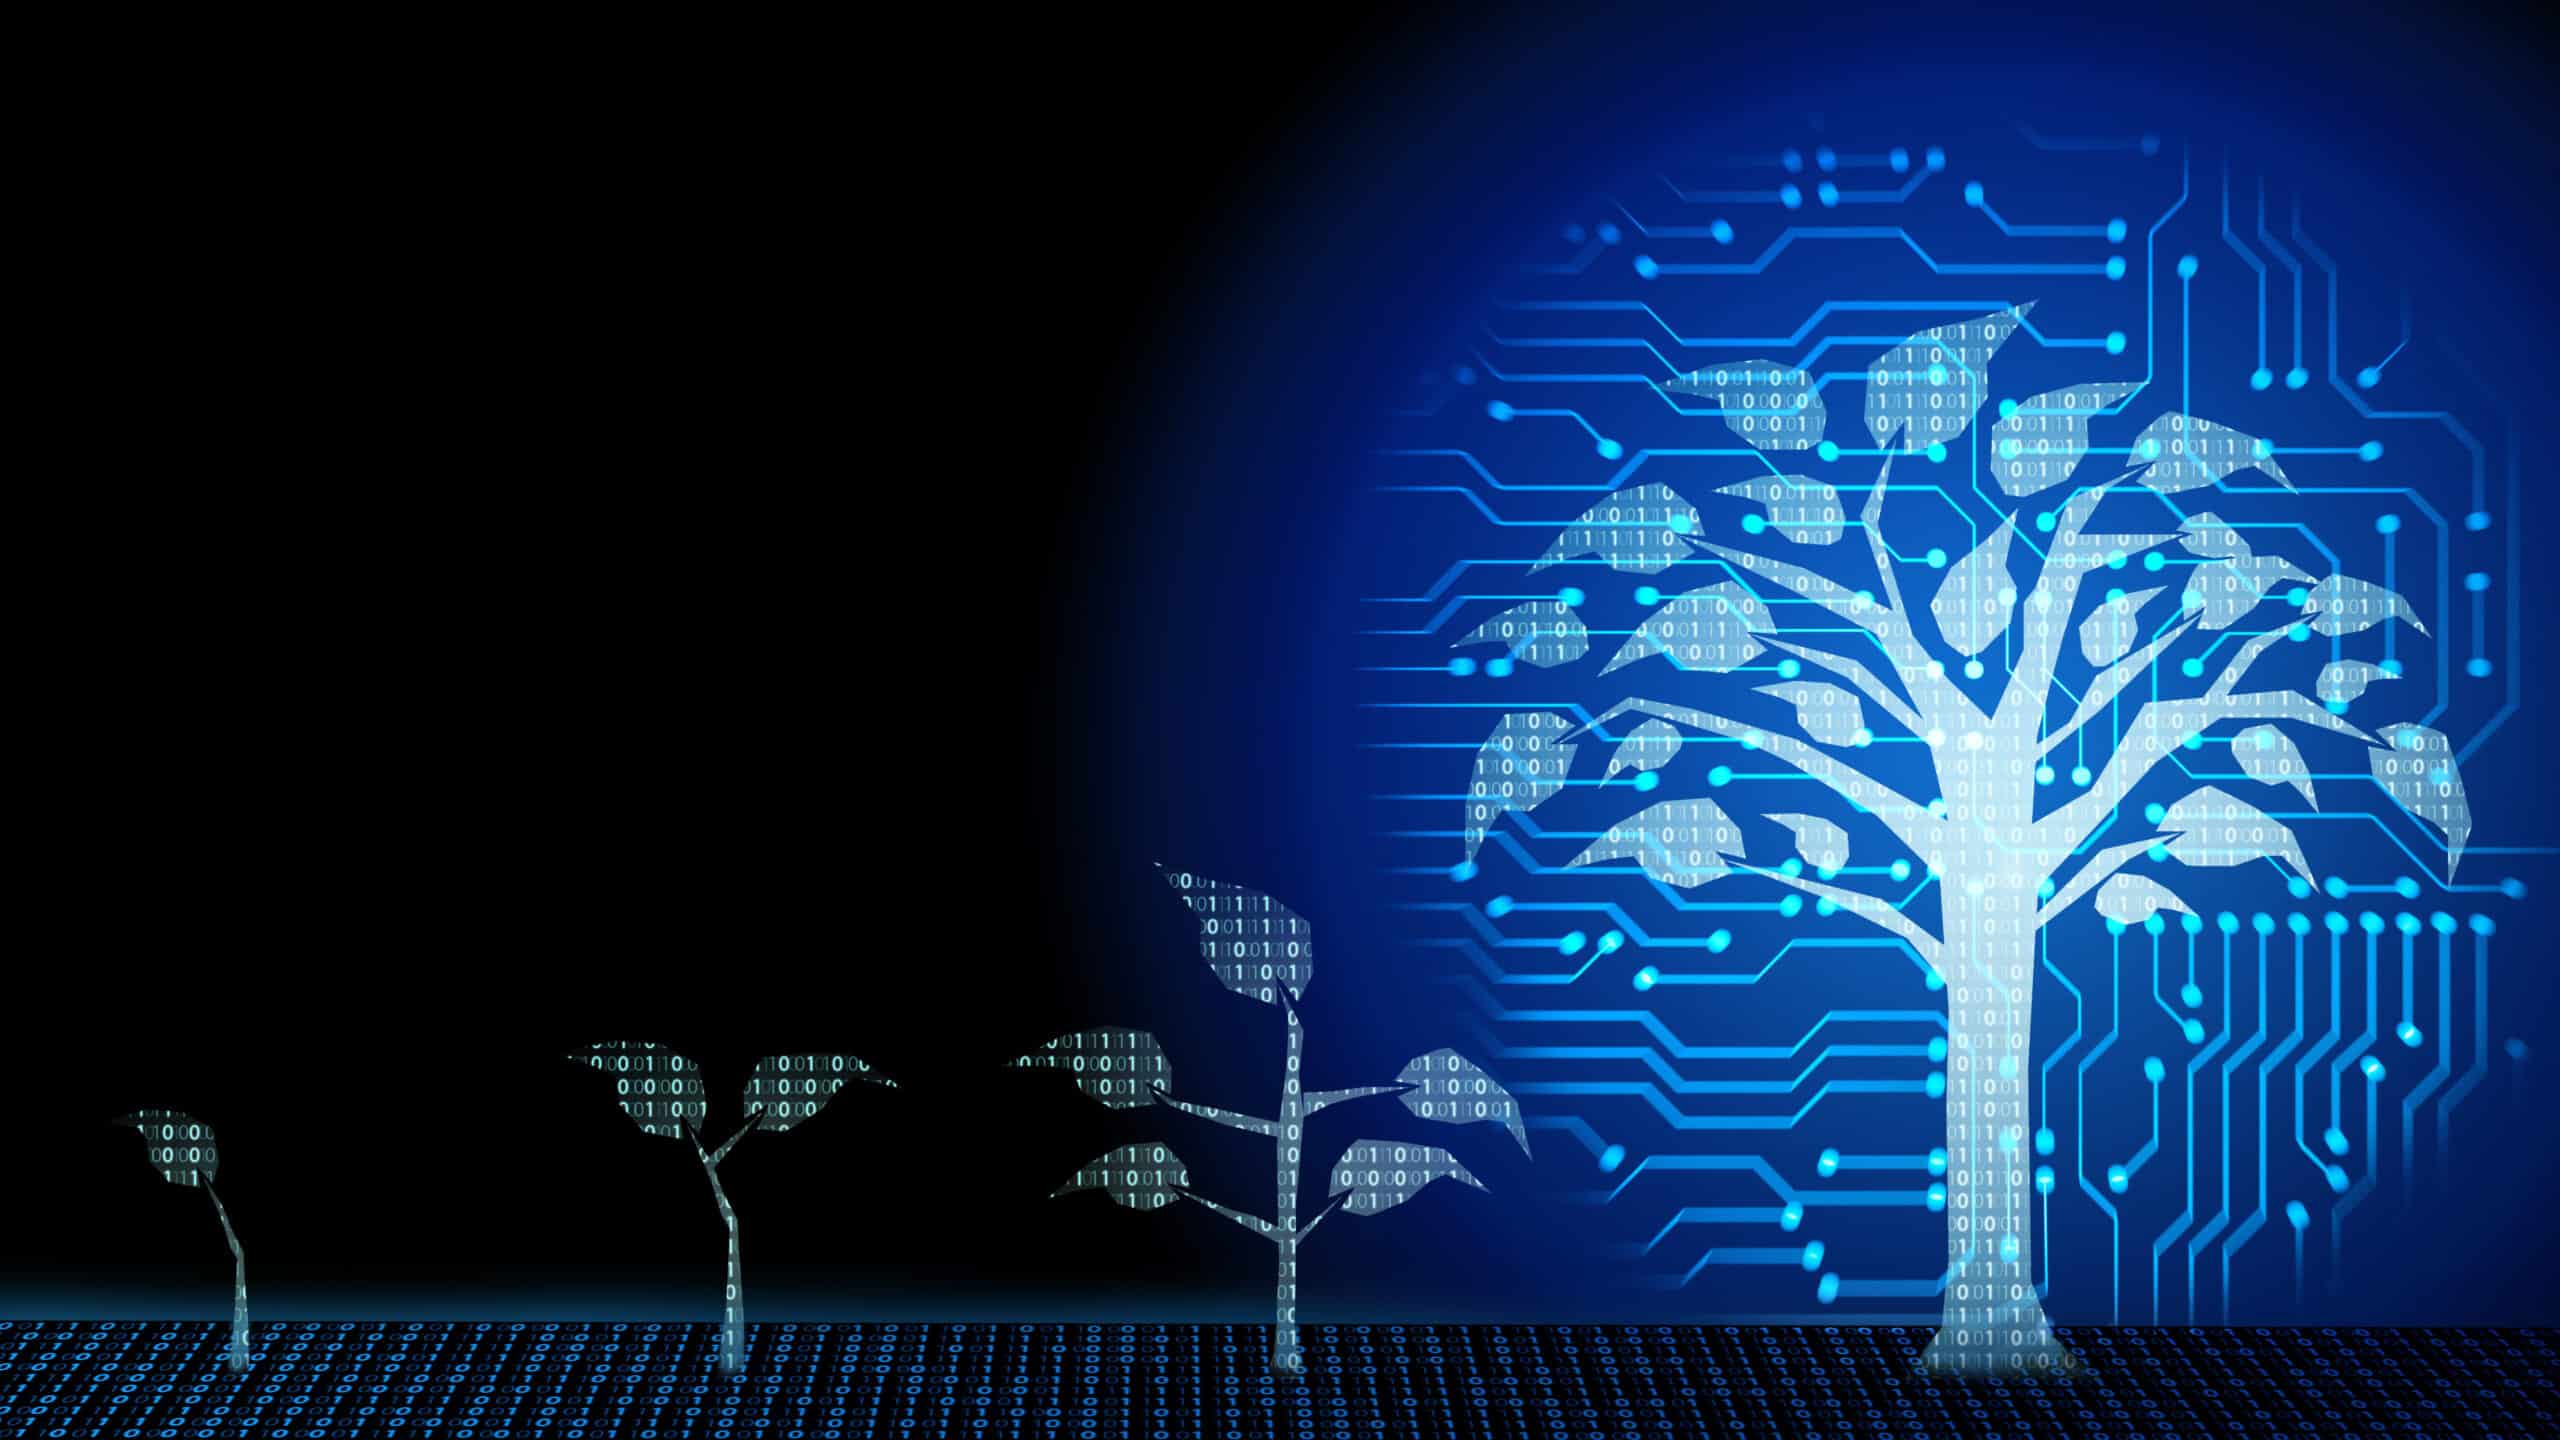 Tree growing symbolizing digital transformation